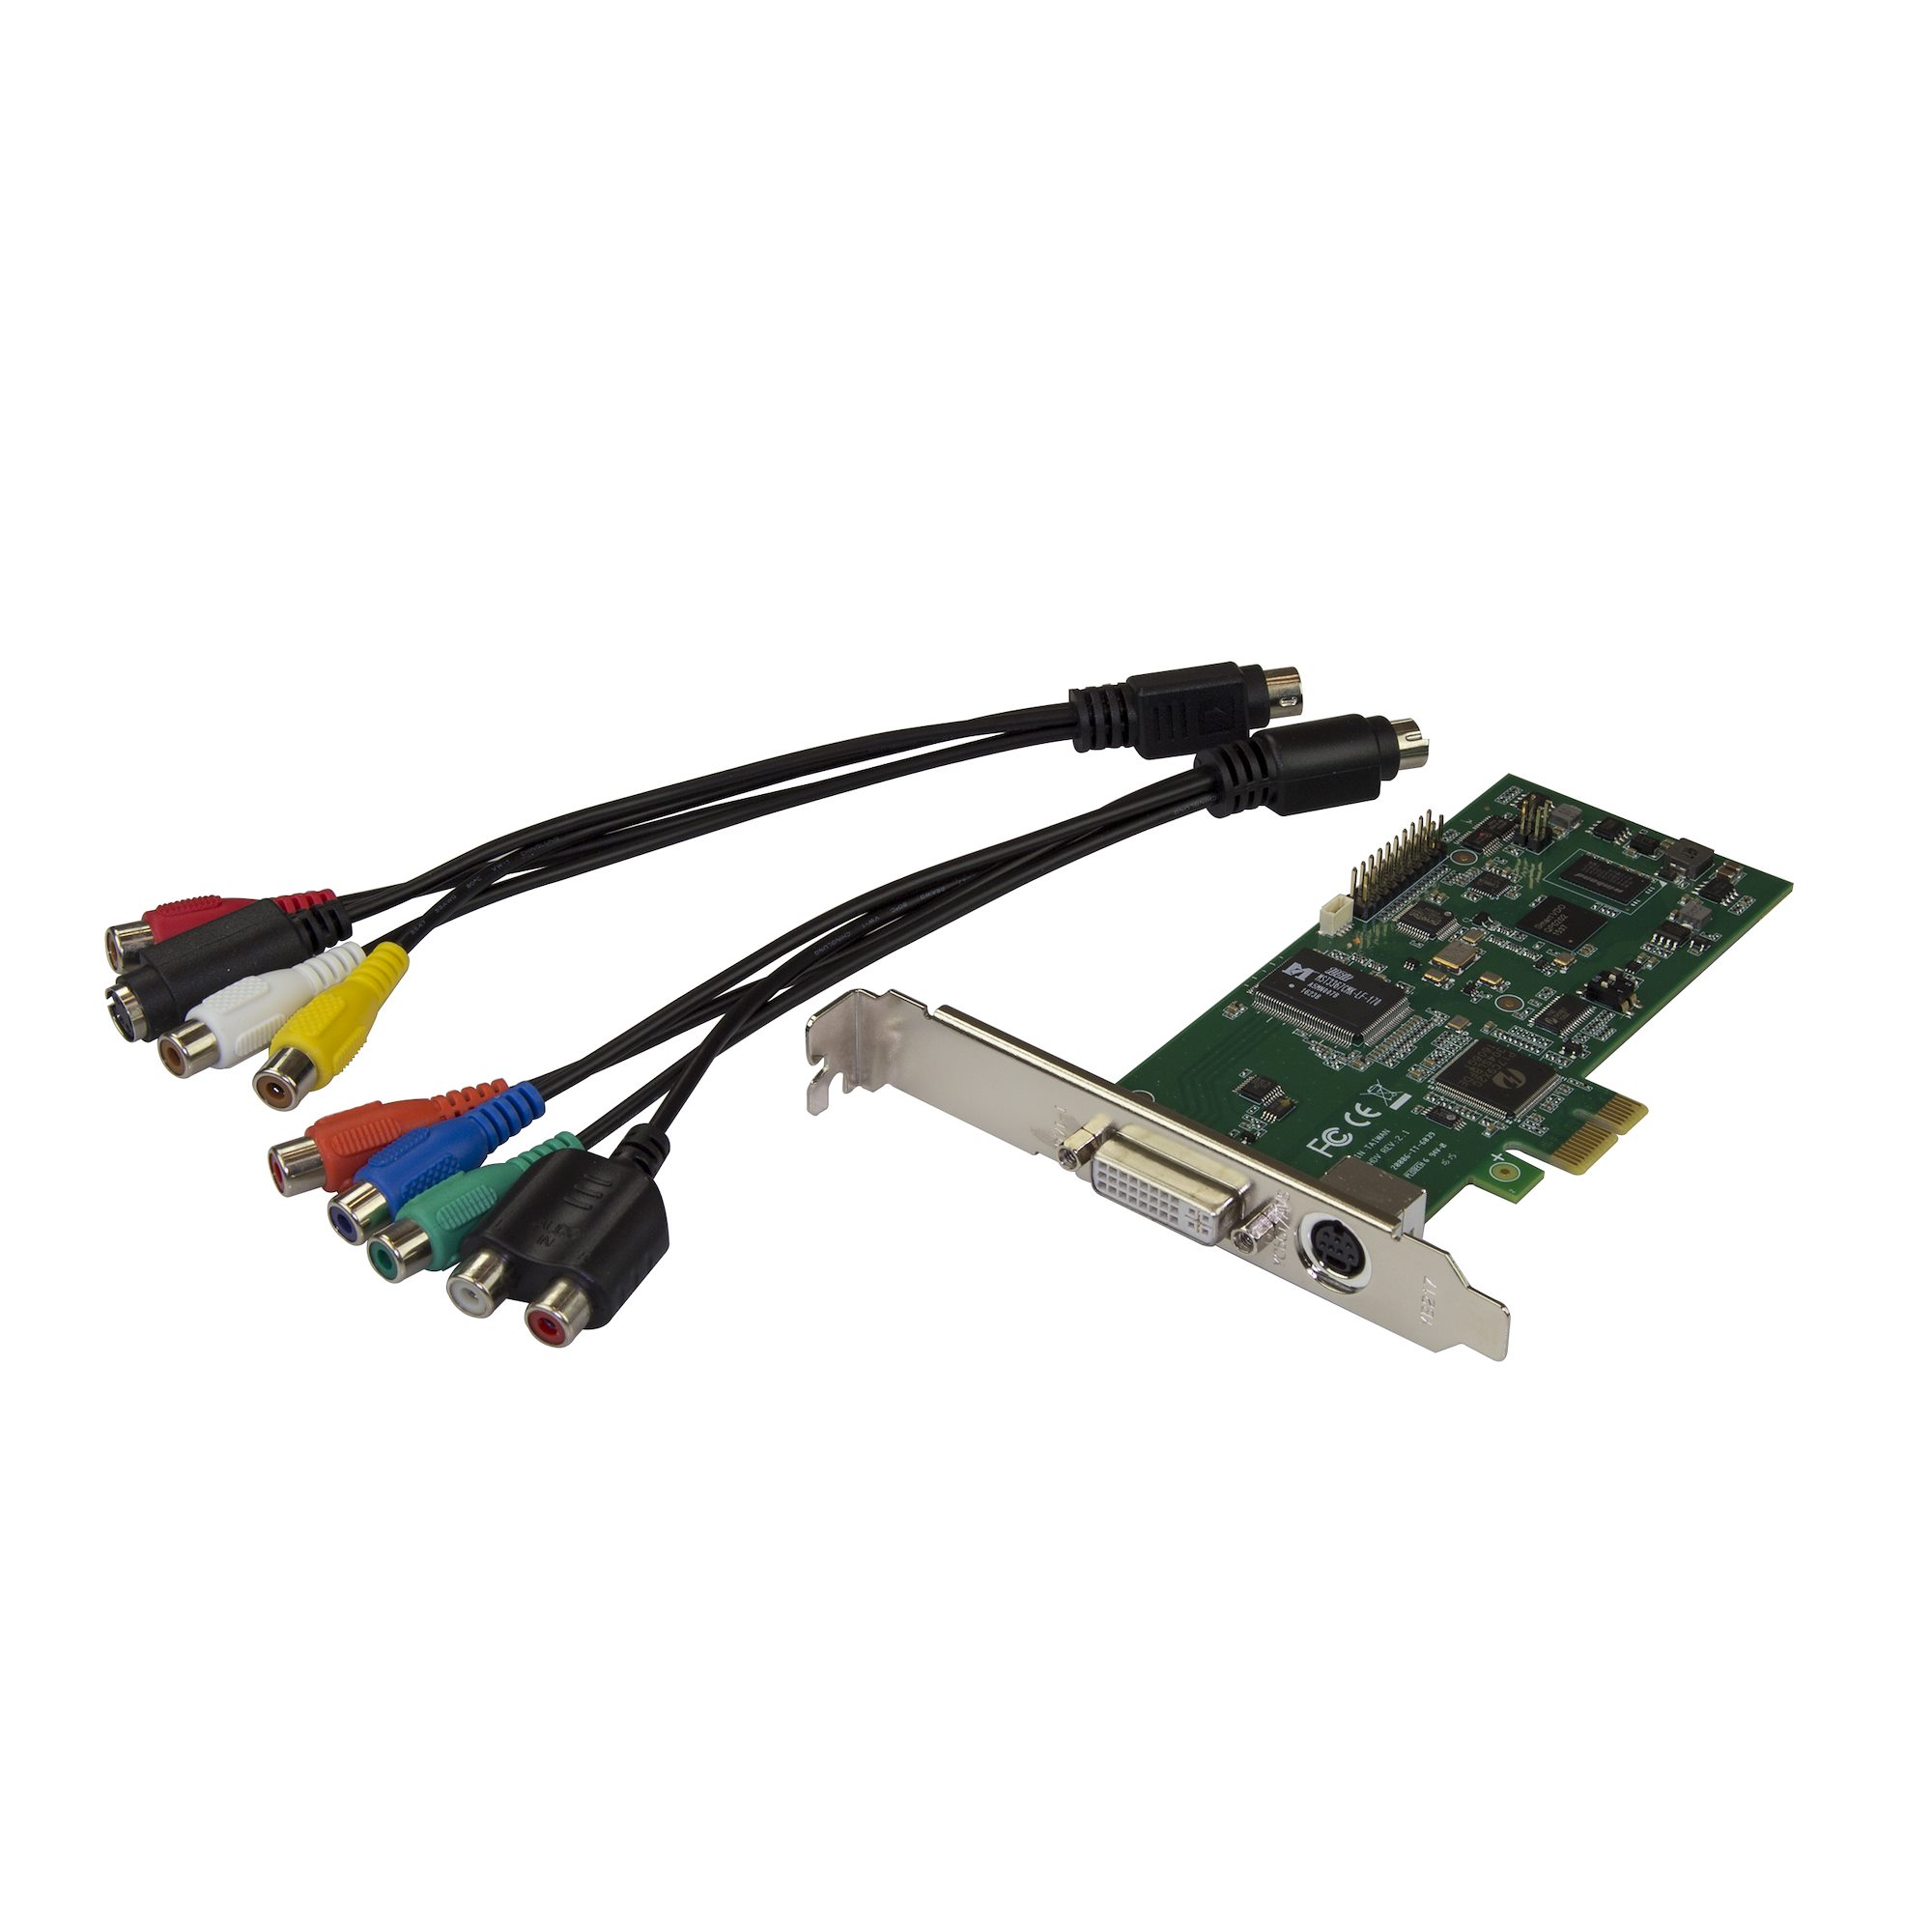 PCIe HDMI Video Capture Card - HDMI, VGA, DVI, or Component Video at 1080p60